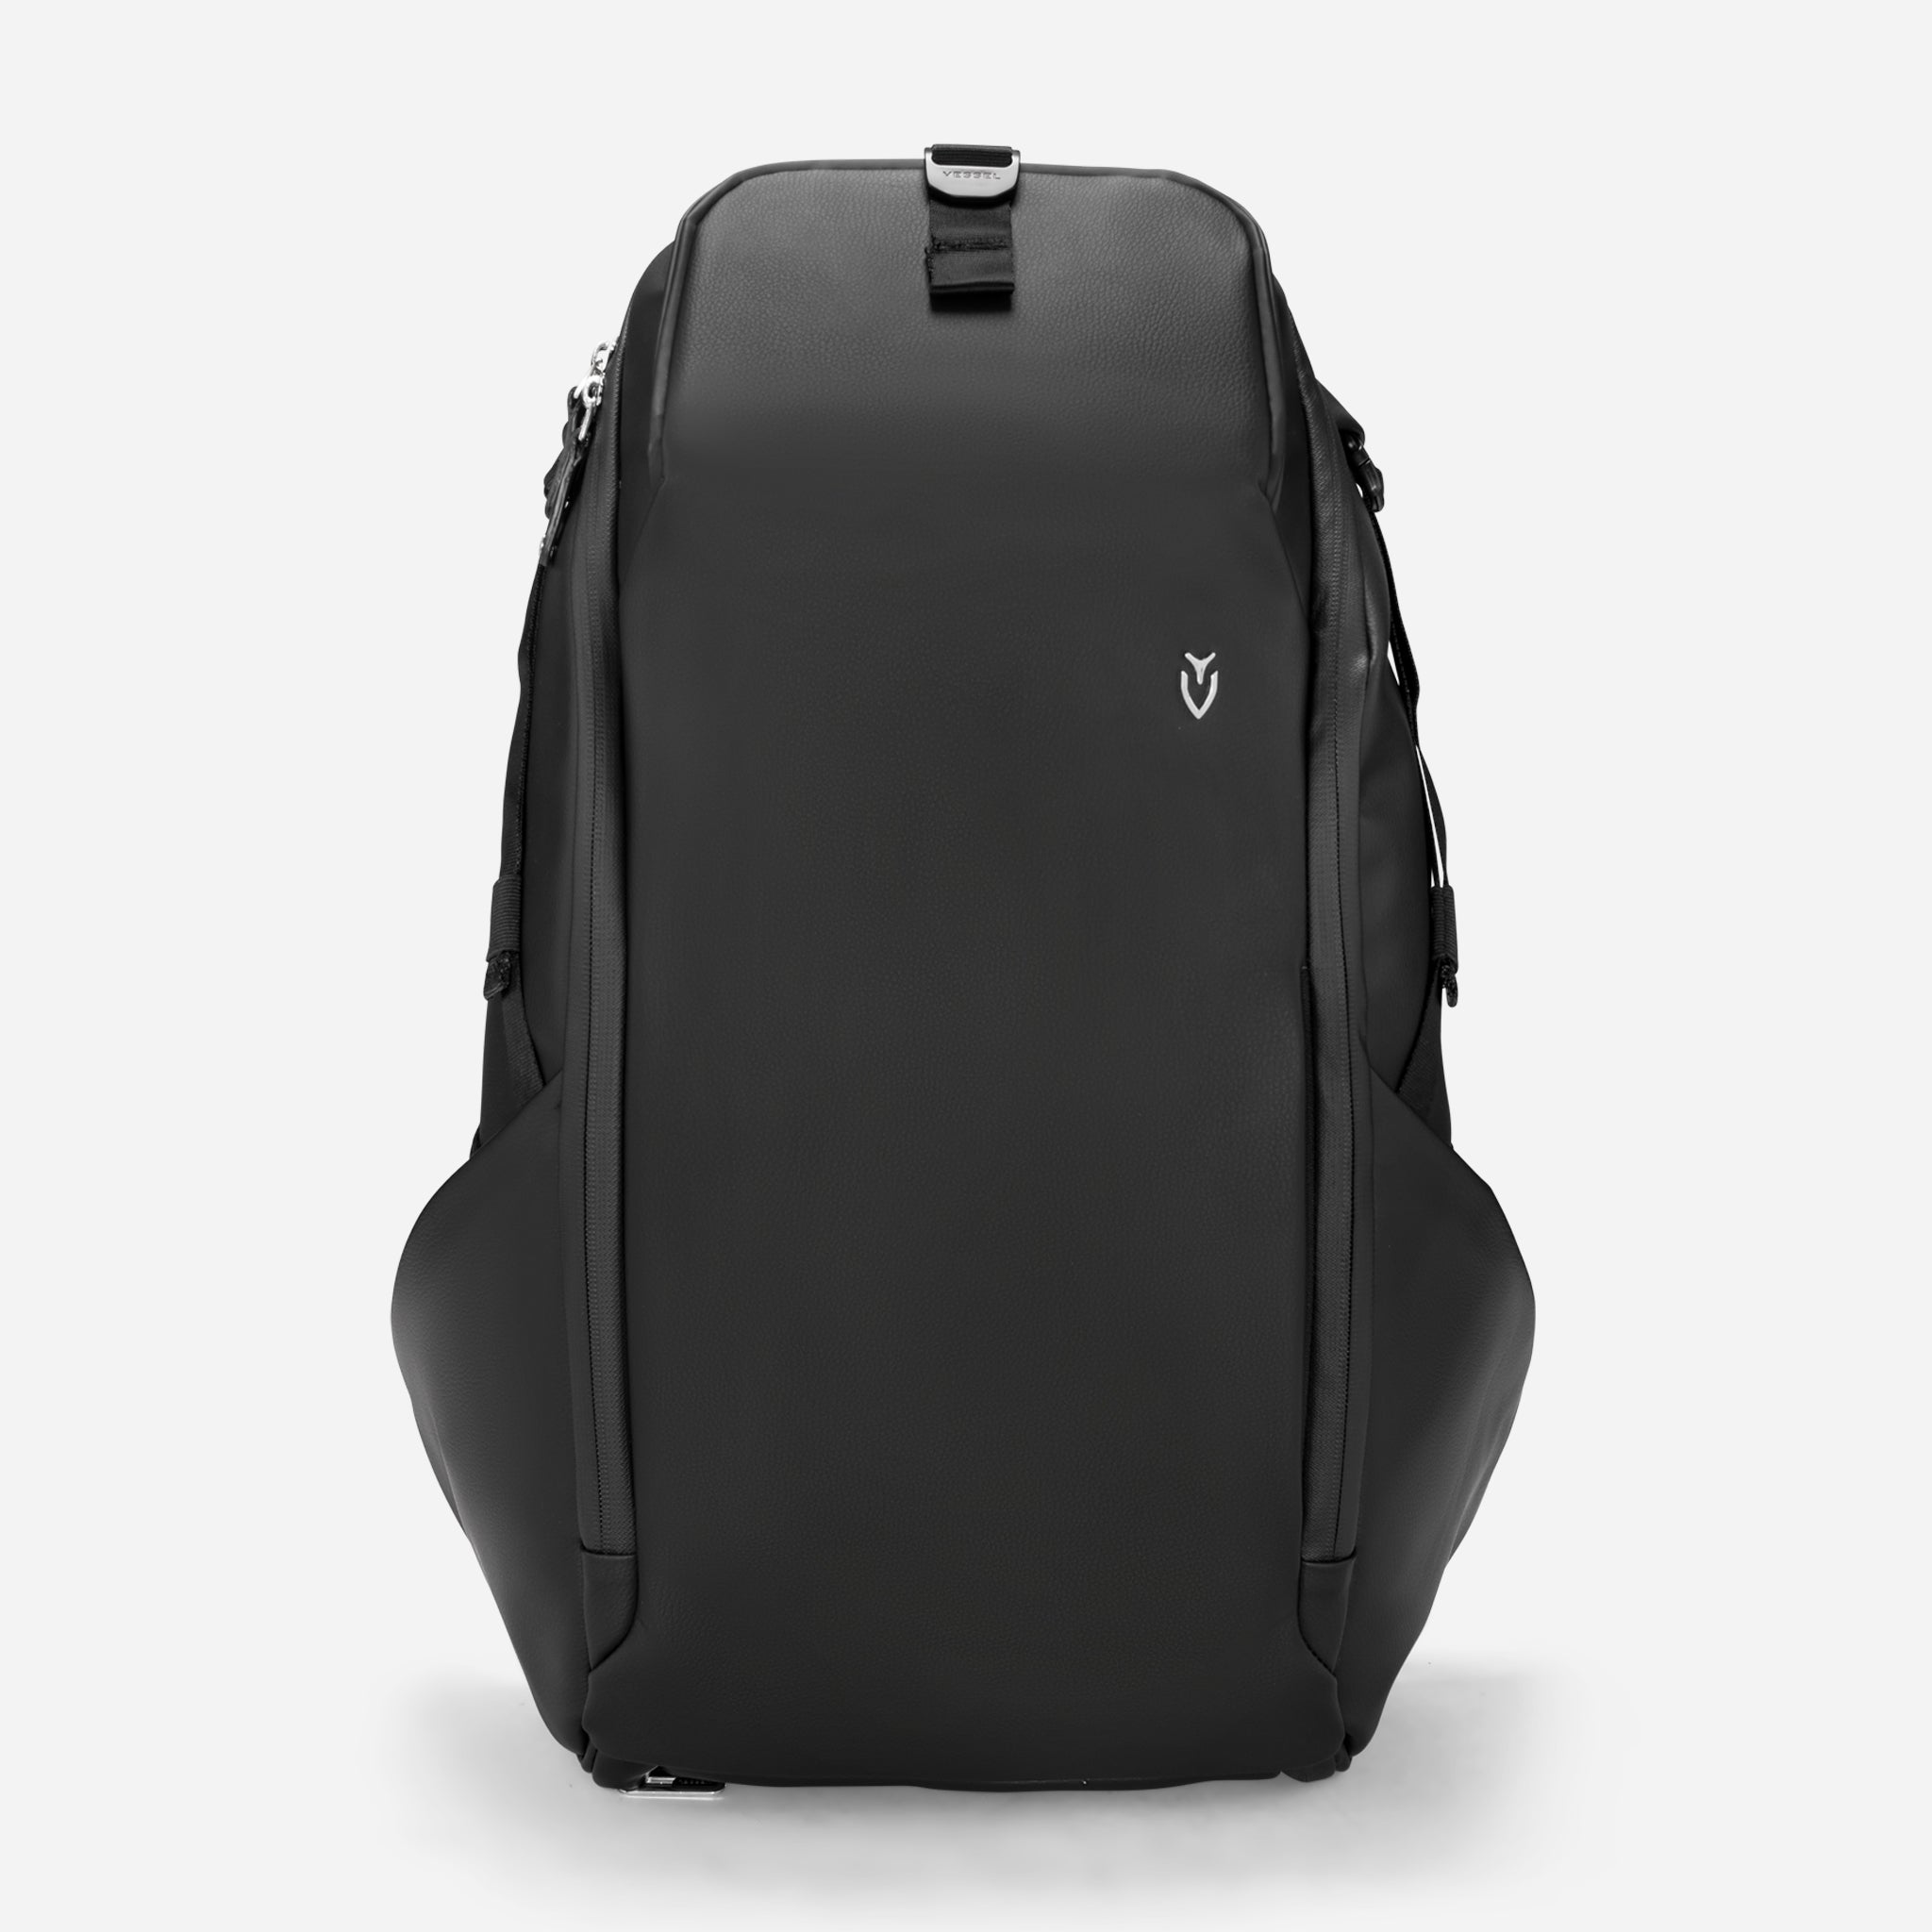 Customizable Duffle Bag Organizer With Double Laptop -  Denmark